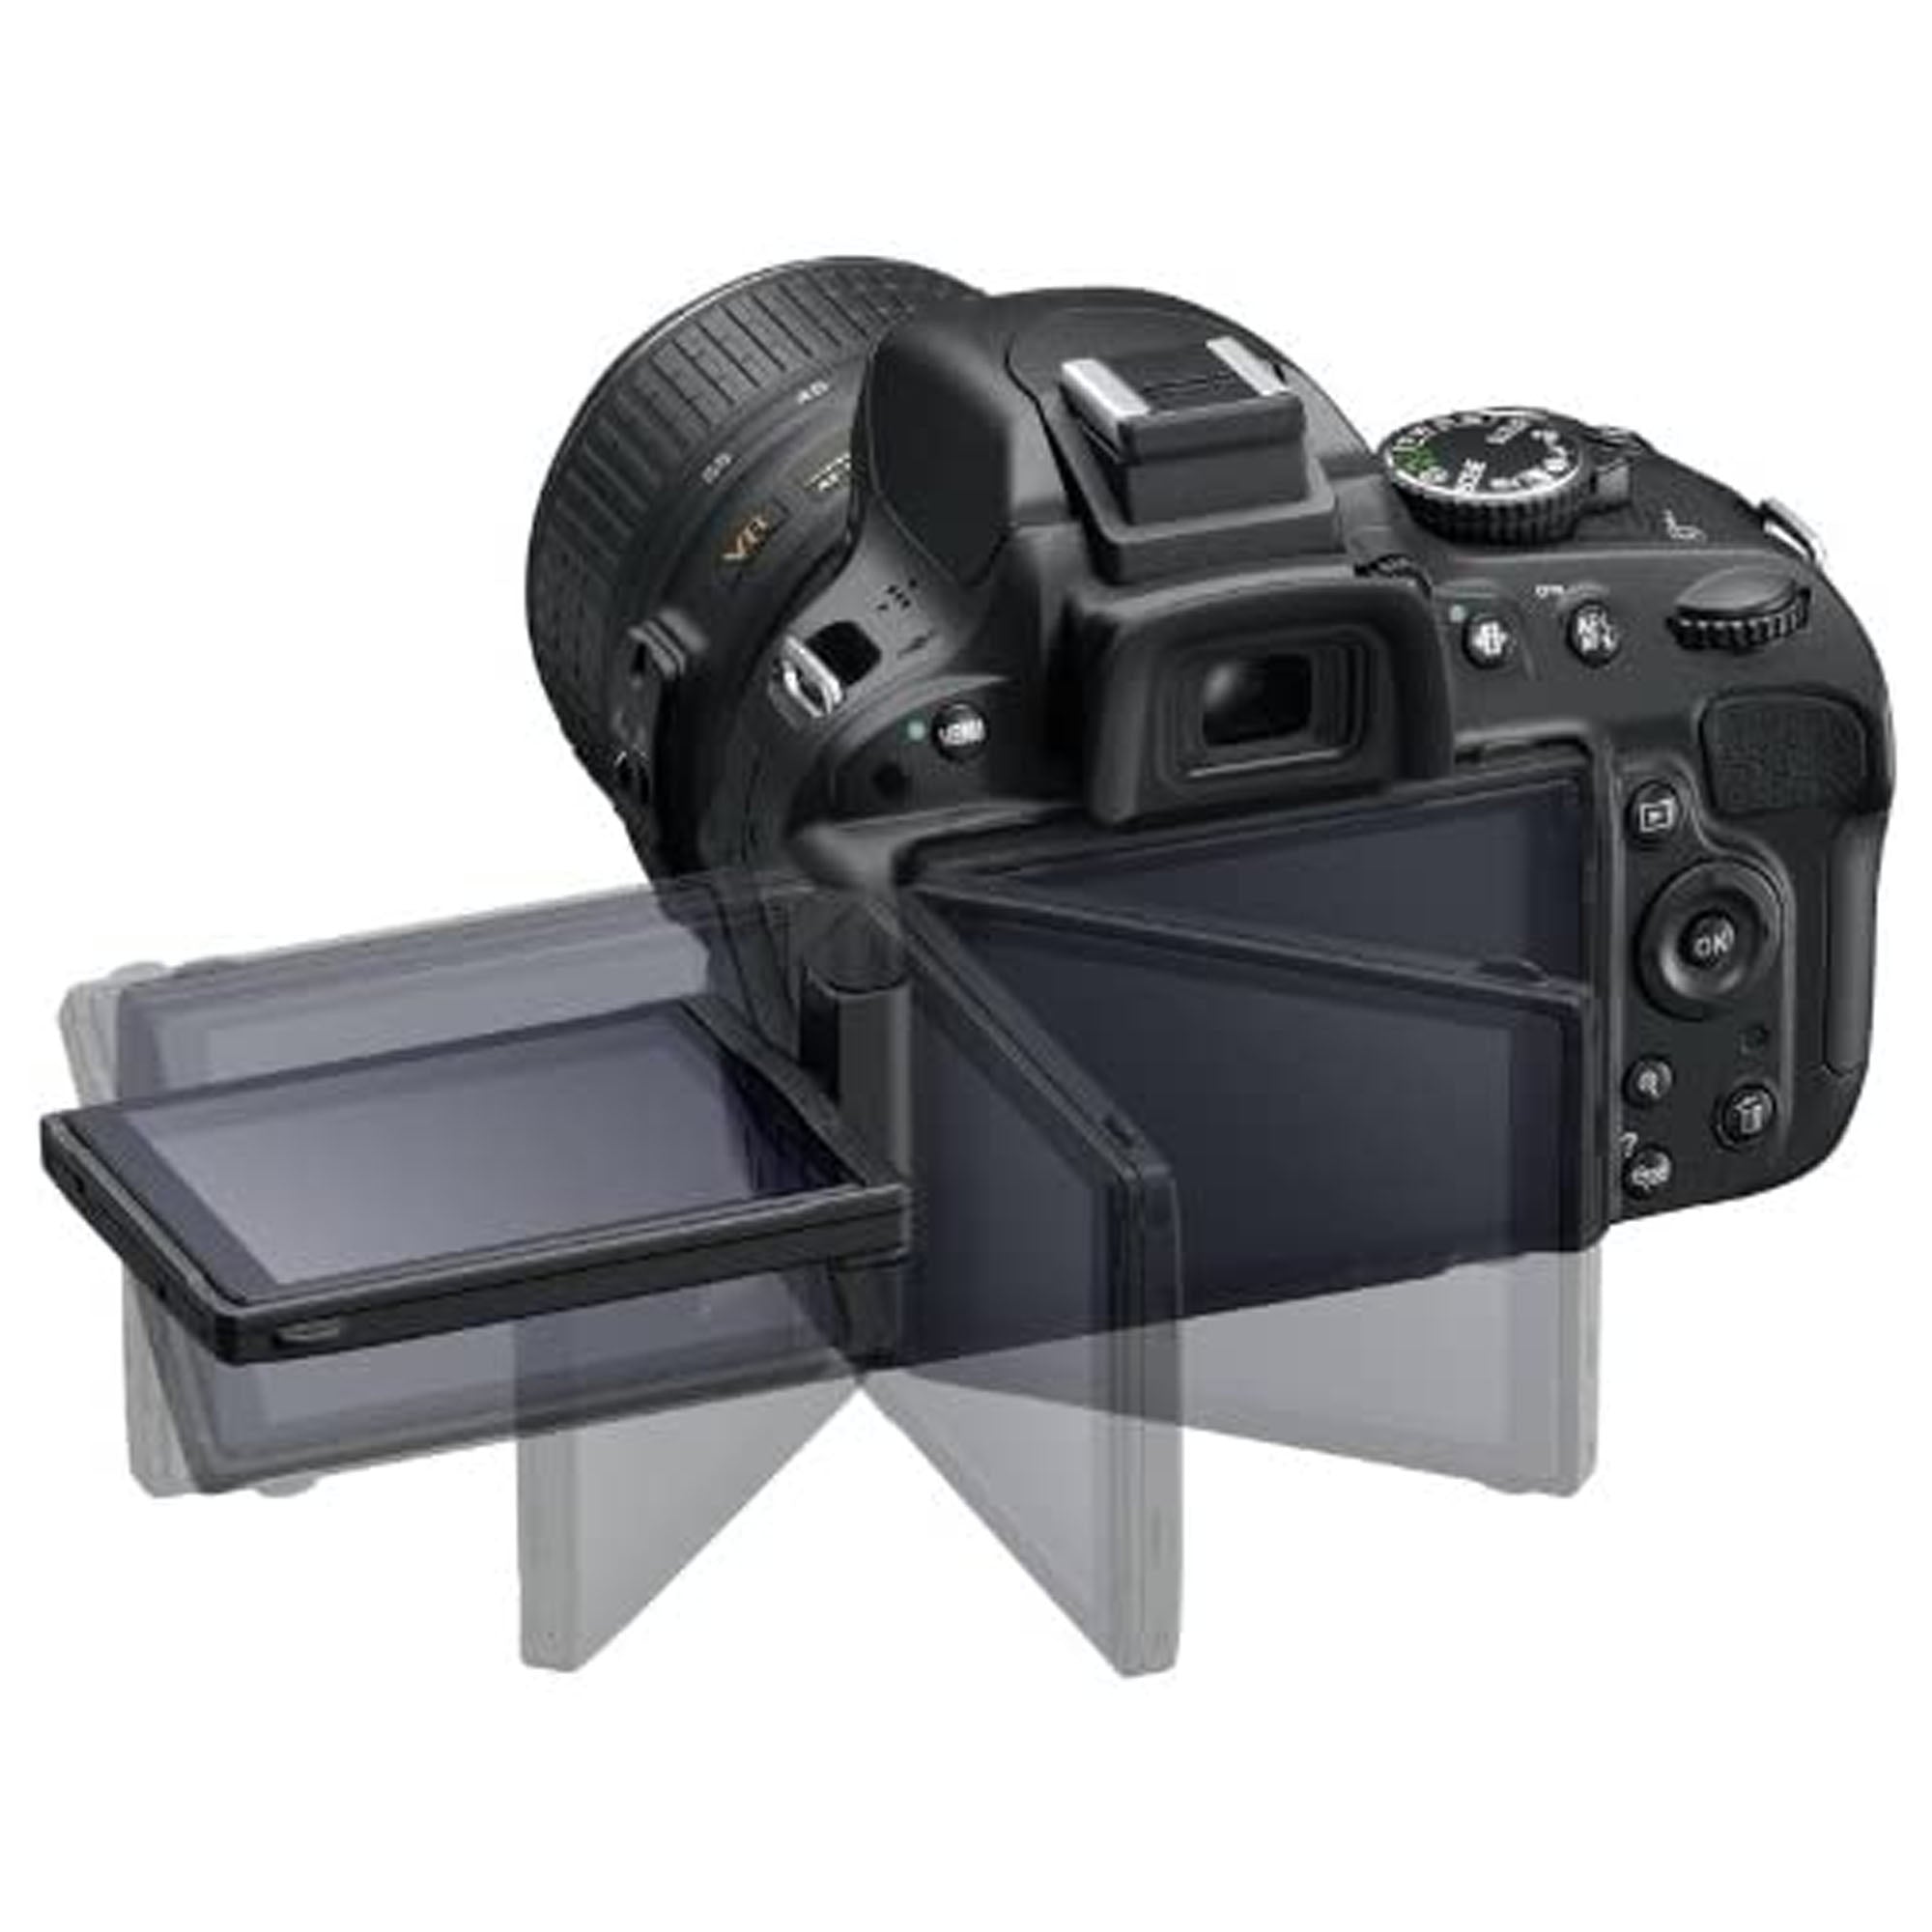 Nikon D5100/D5600 DSLR Camera with 18-55mm Lens & 70 